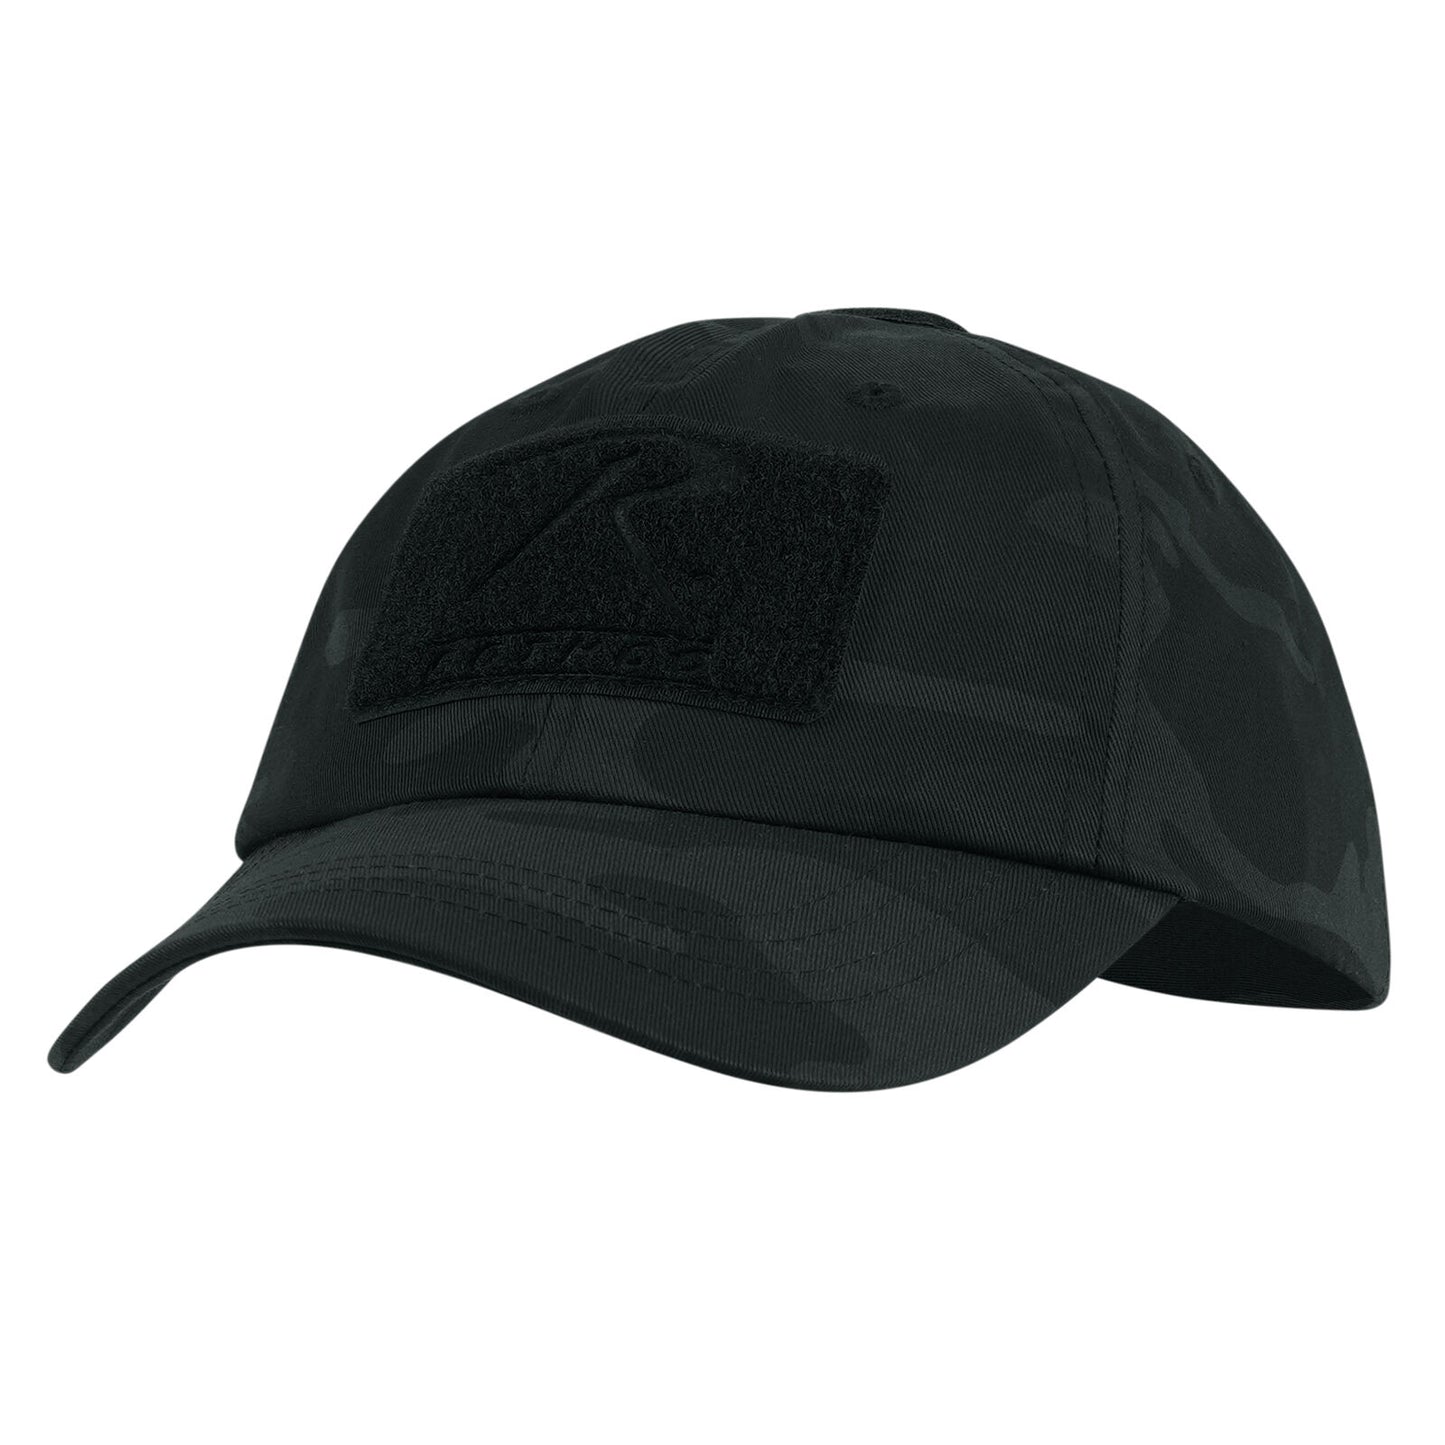 Midnight Black Camo Tactical Operator Adjustable Cap Hat